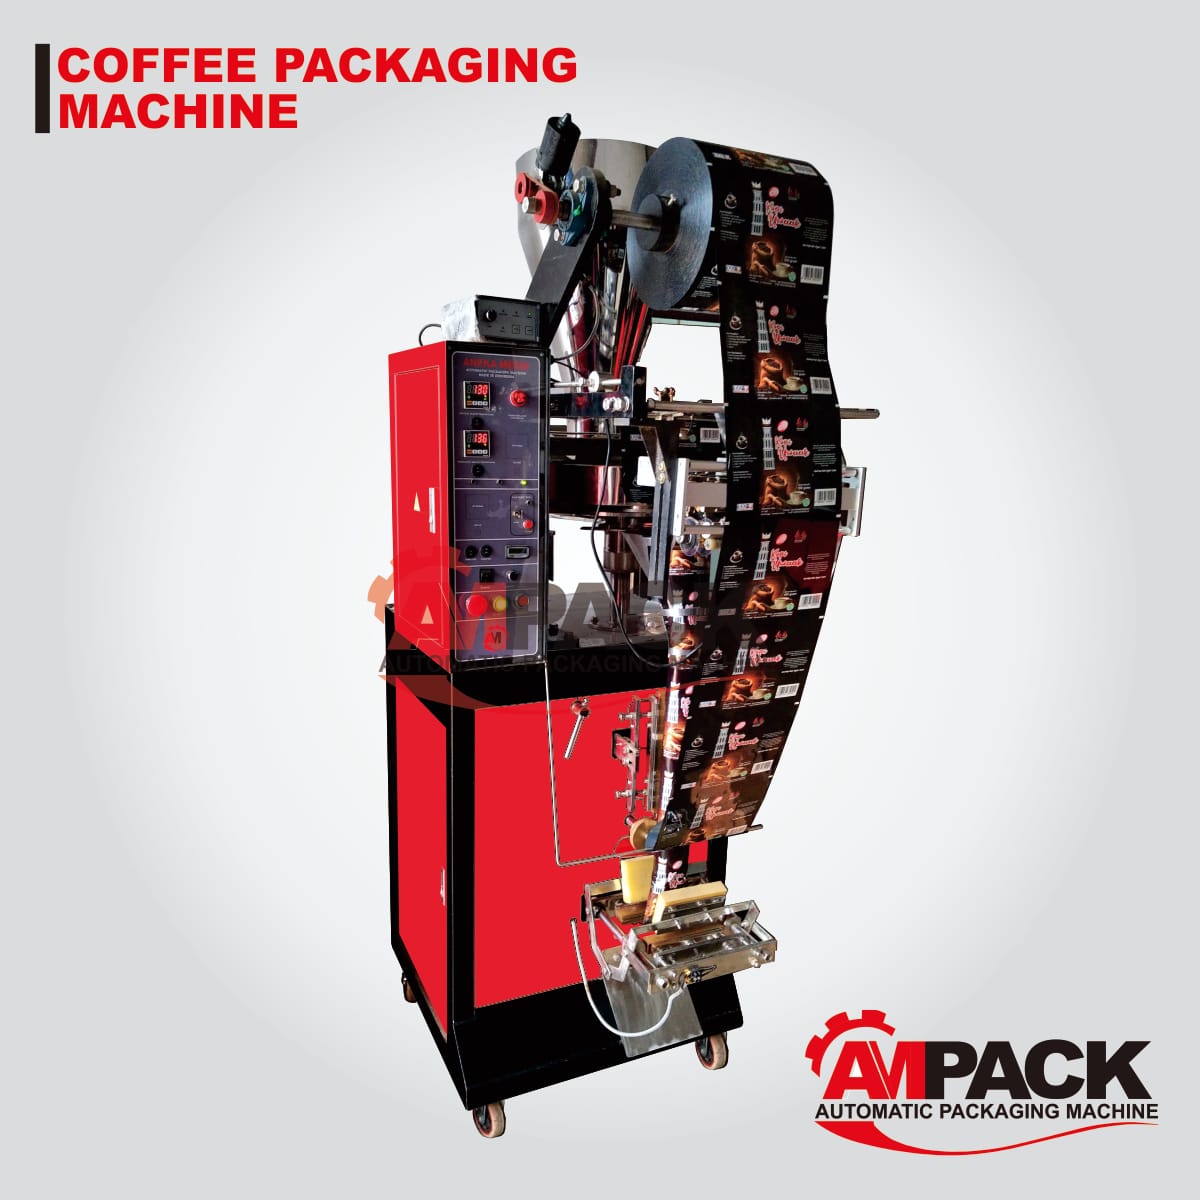 https://ampackmachinery.com/uploads/2021/03/coffee-packaging-machine.jpeg